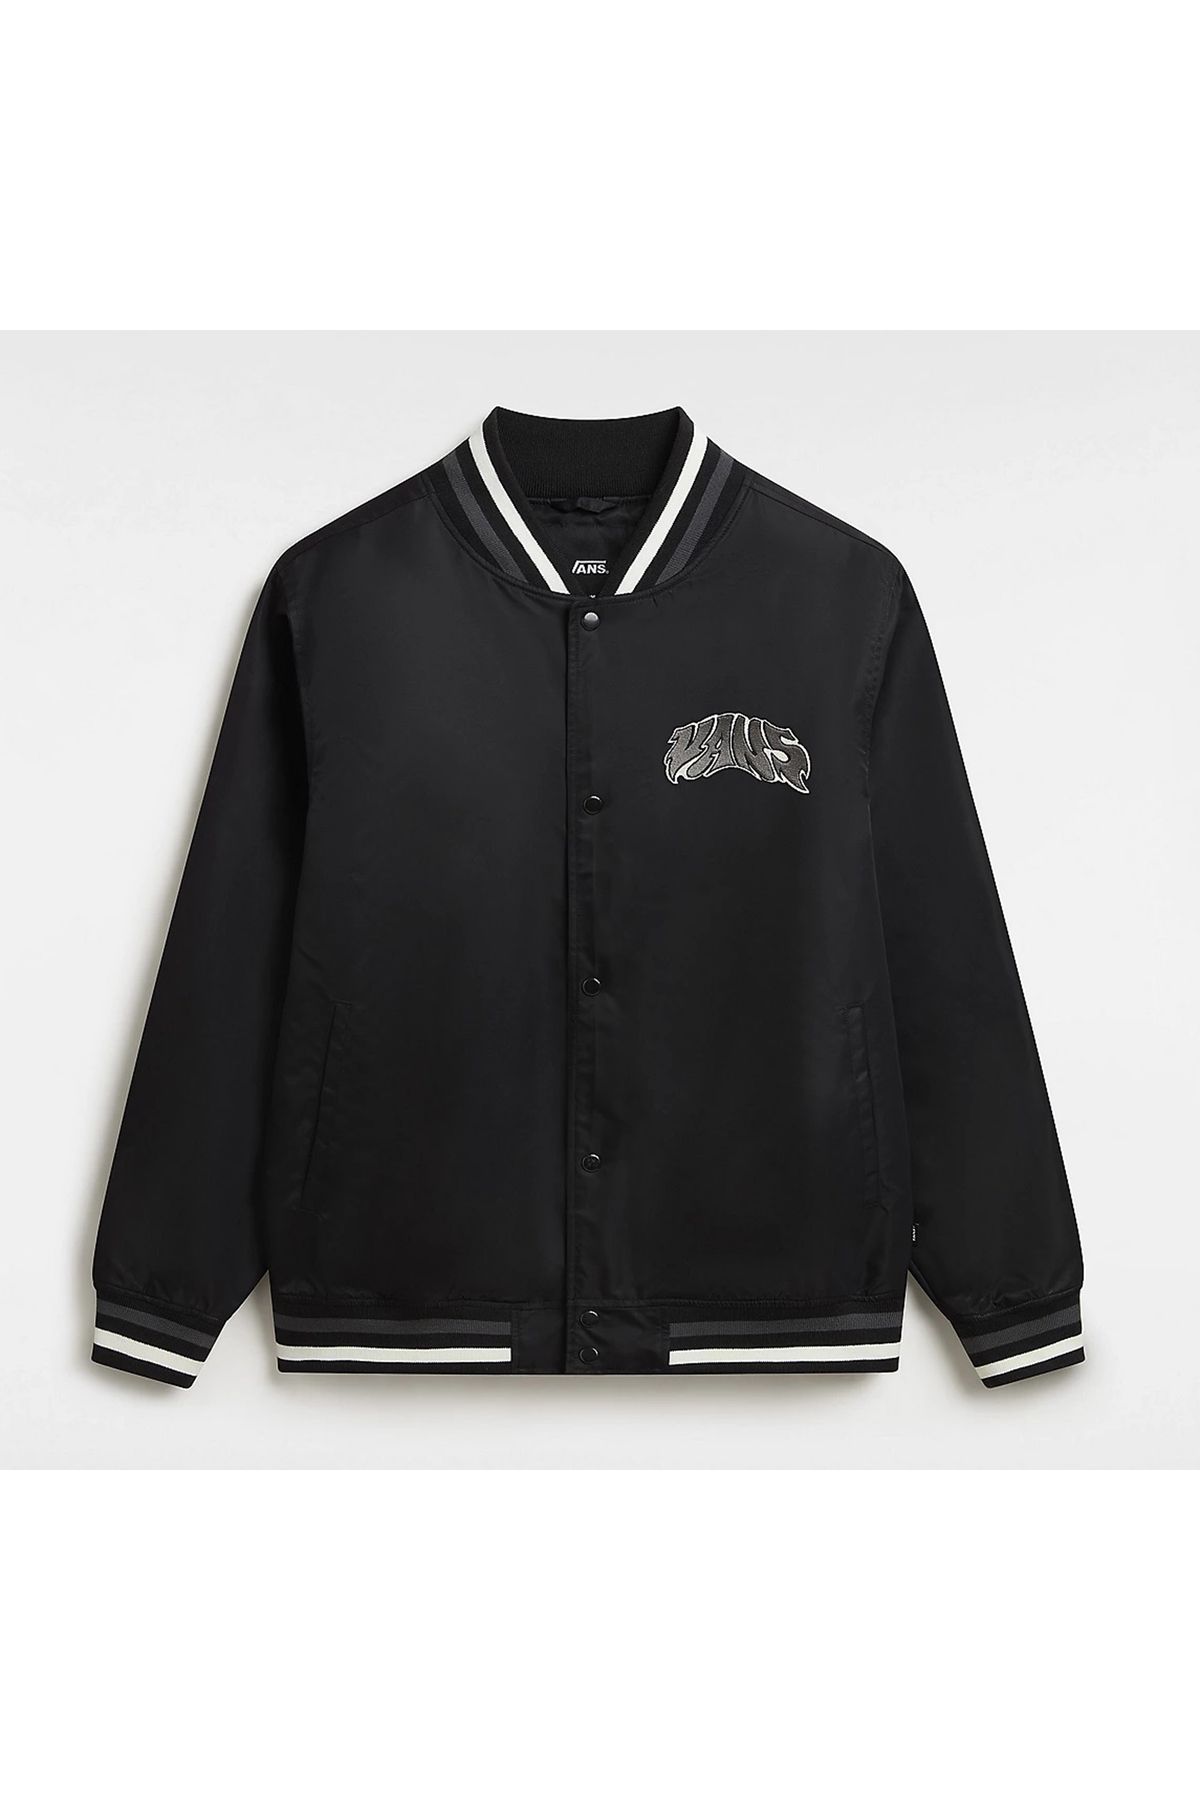 Vans 000G81BLK1-R Vans Dunton Baseball Jacket Erkek Ceket Siyah